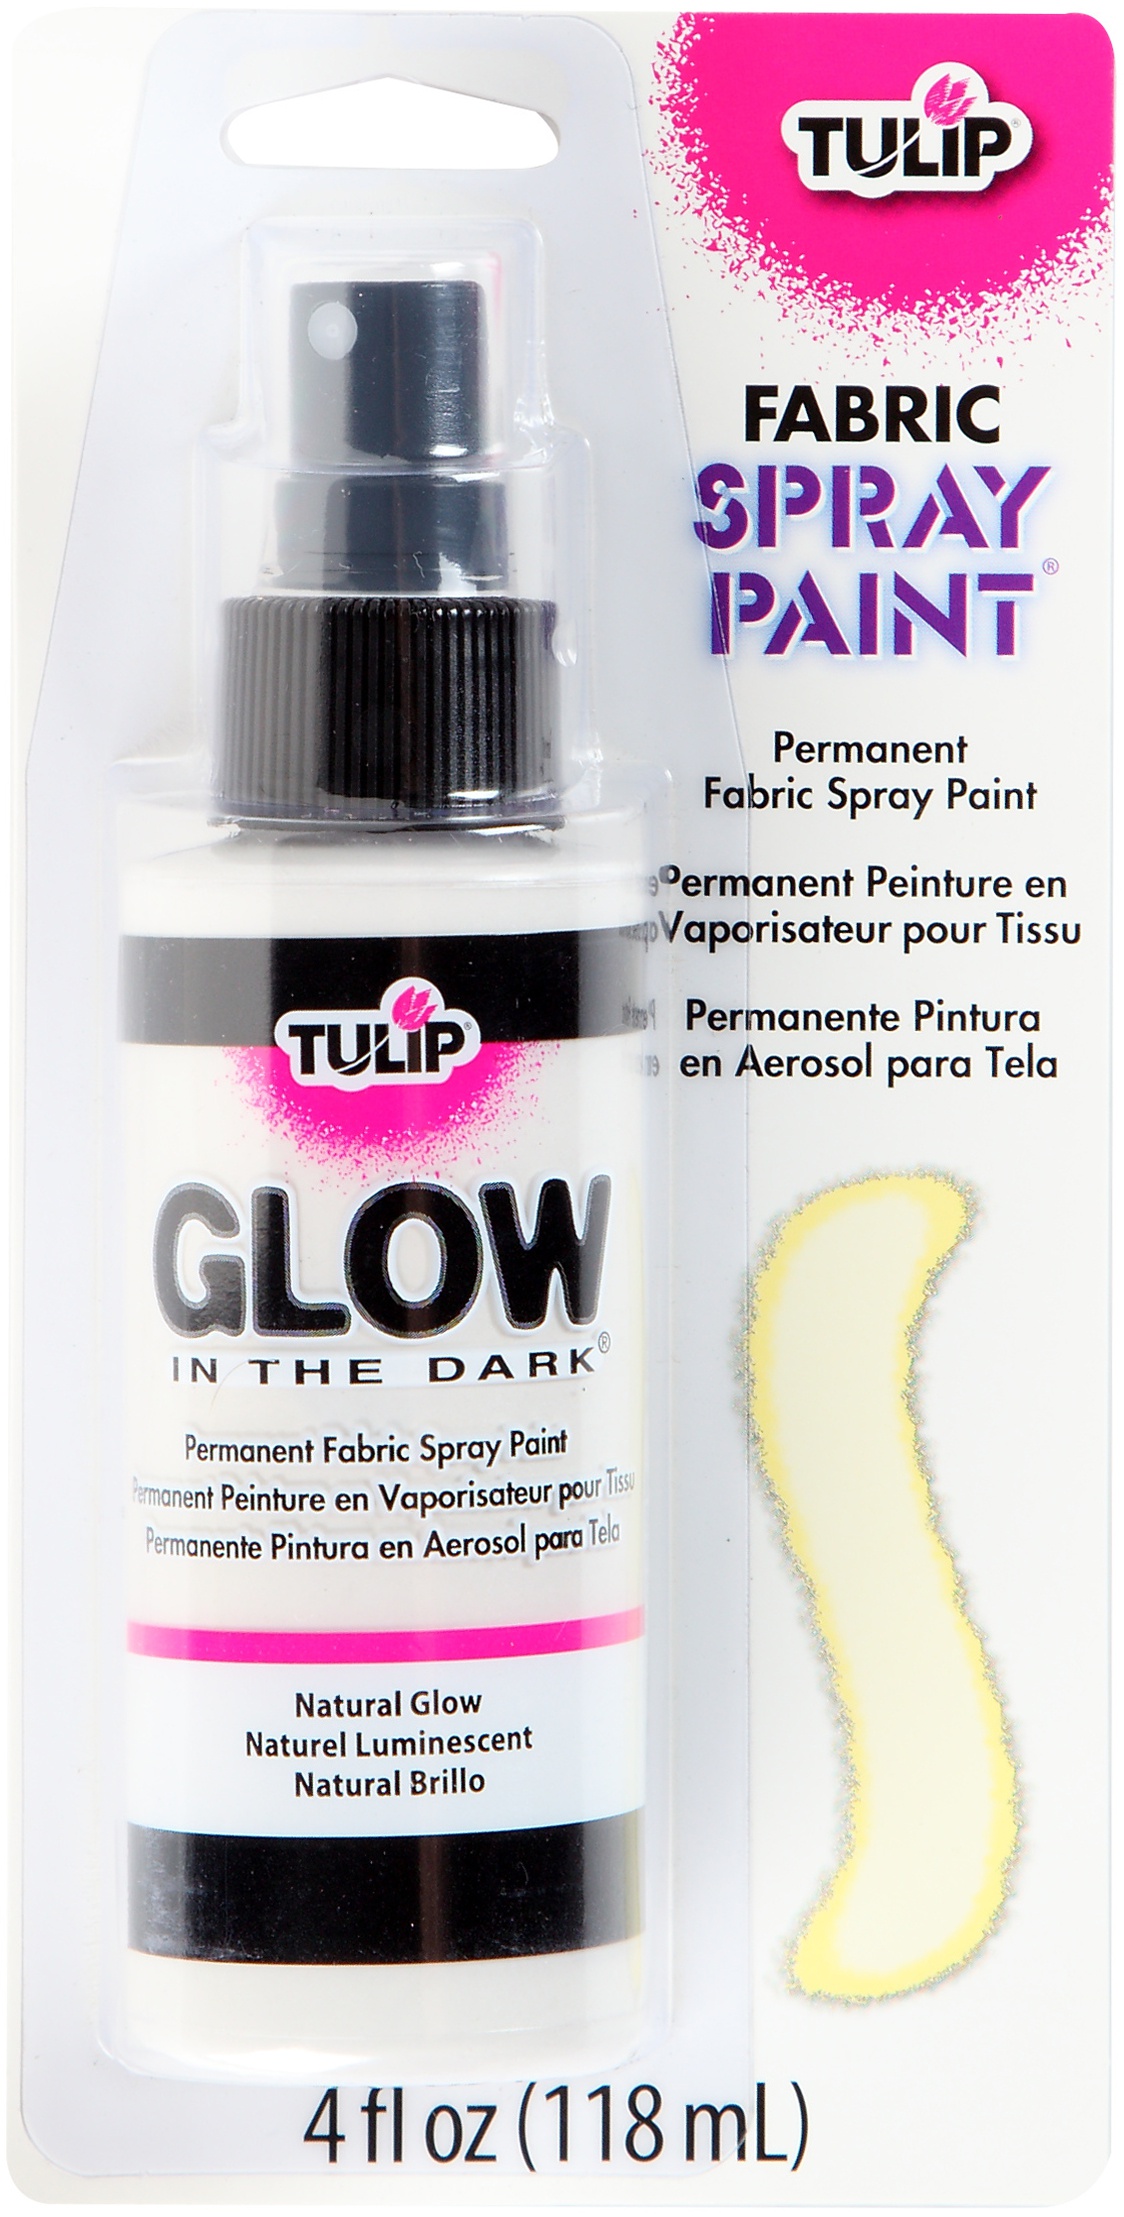 Tulip Fabric Spray Paint 4oz-Glow In The Dark, Set Of 3 | eBay Glow In The Dark Fabric Spray Paint